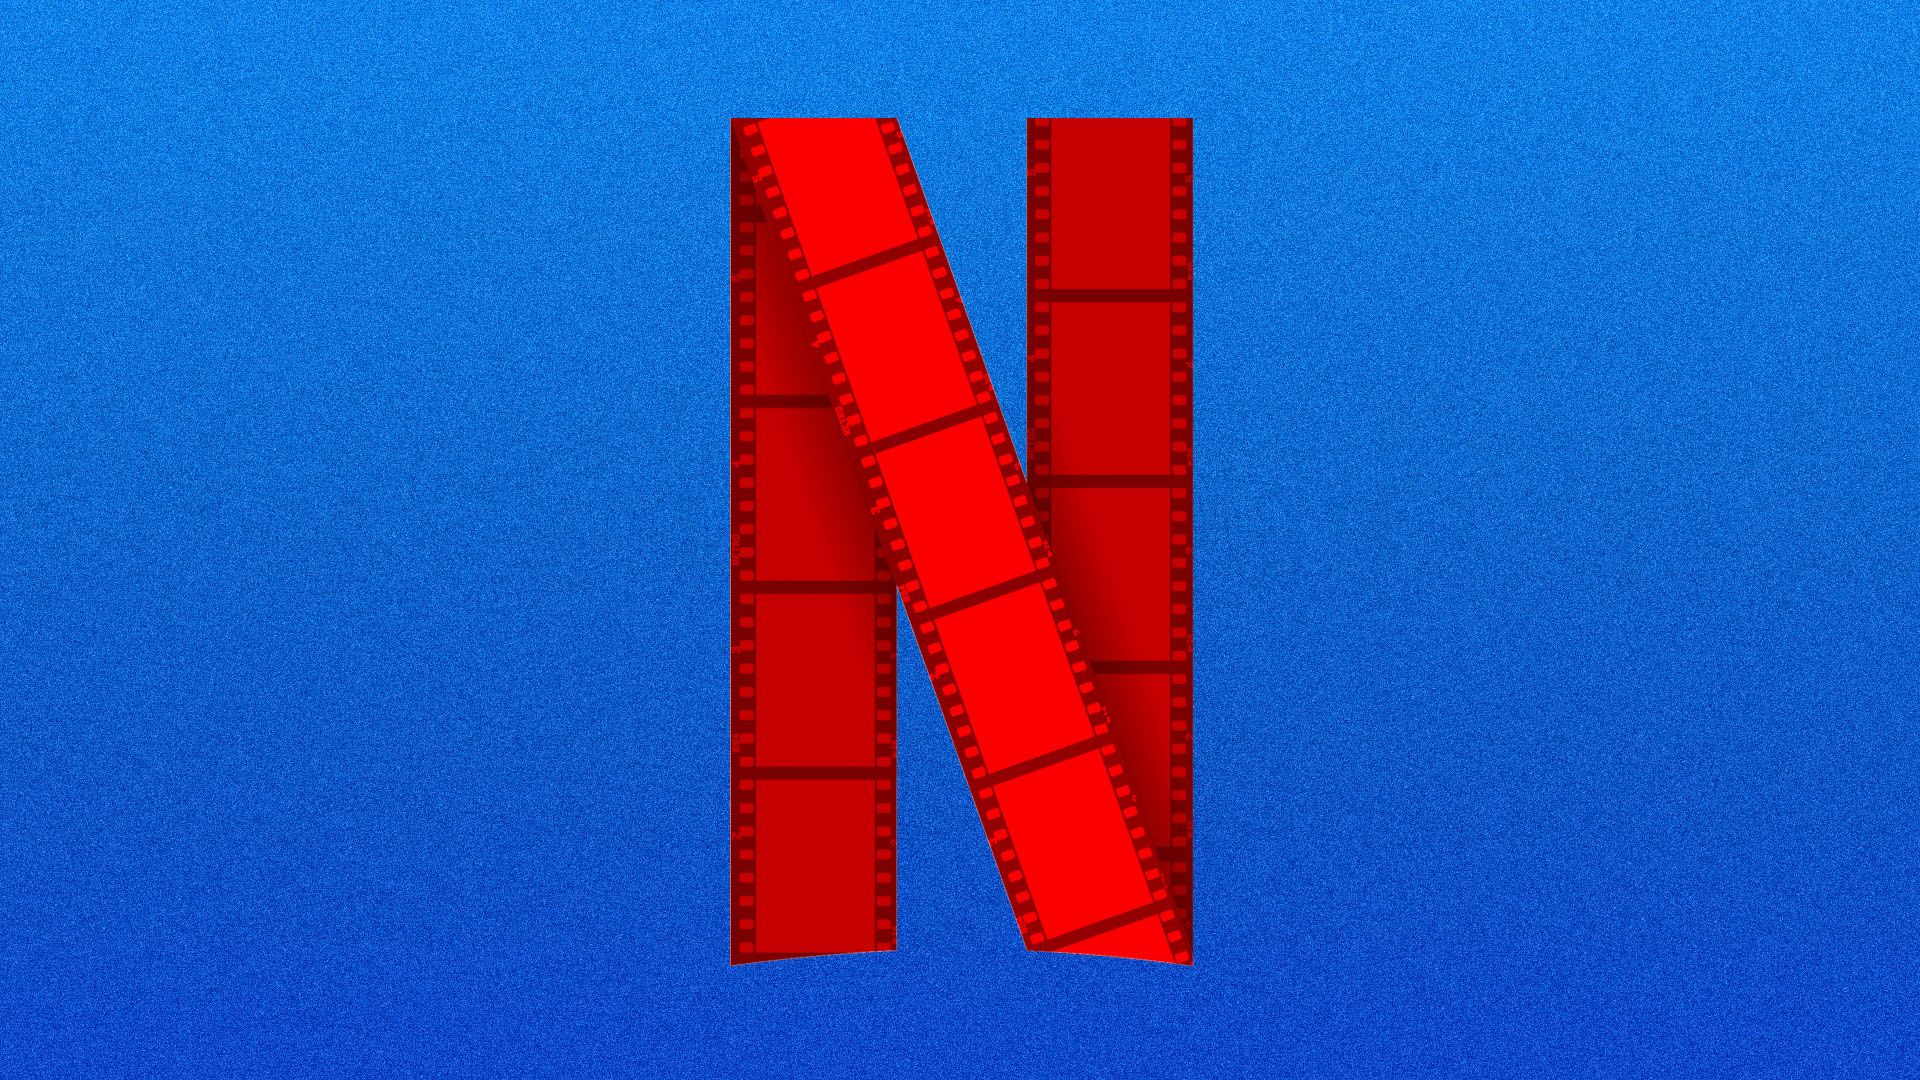 Illustration of Netflix logo made of film reel